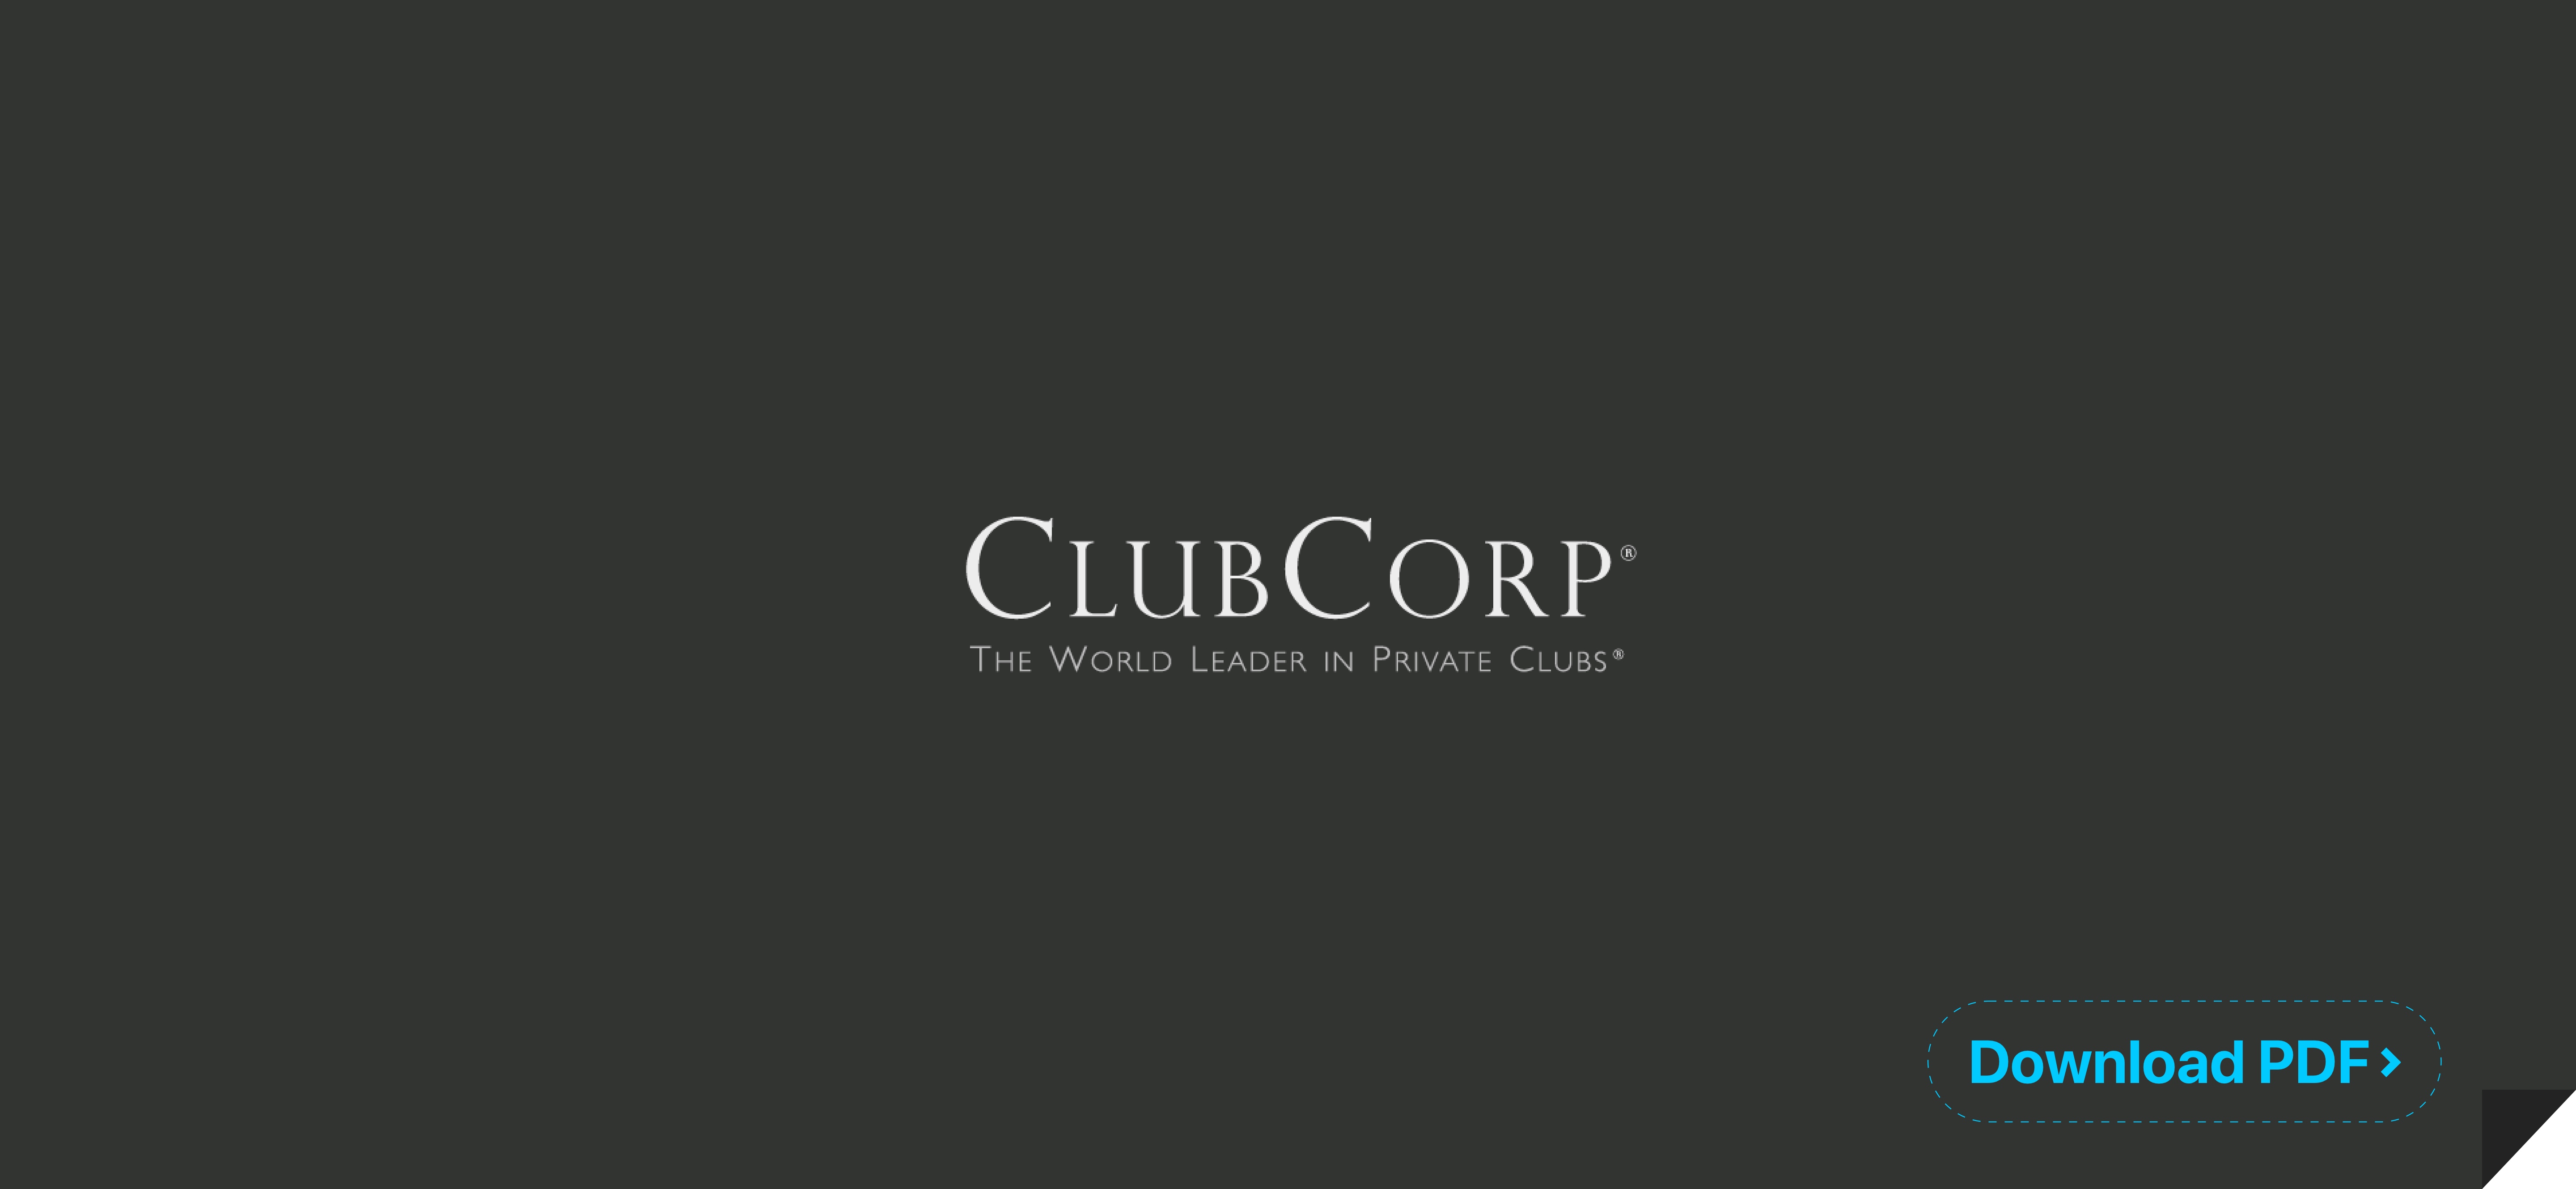 Club Corp UX by Moera Creative